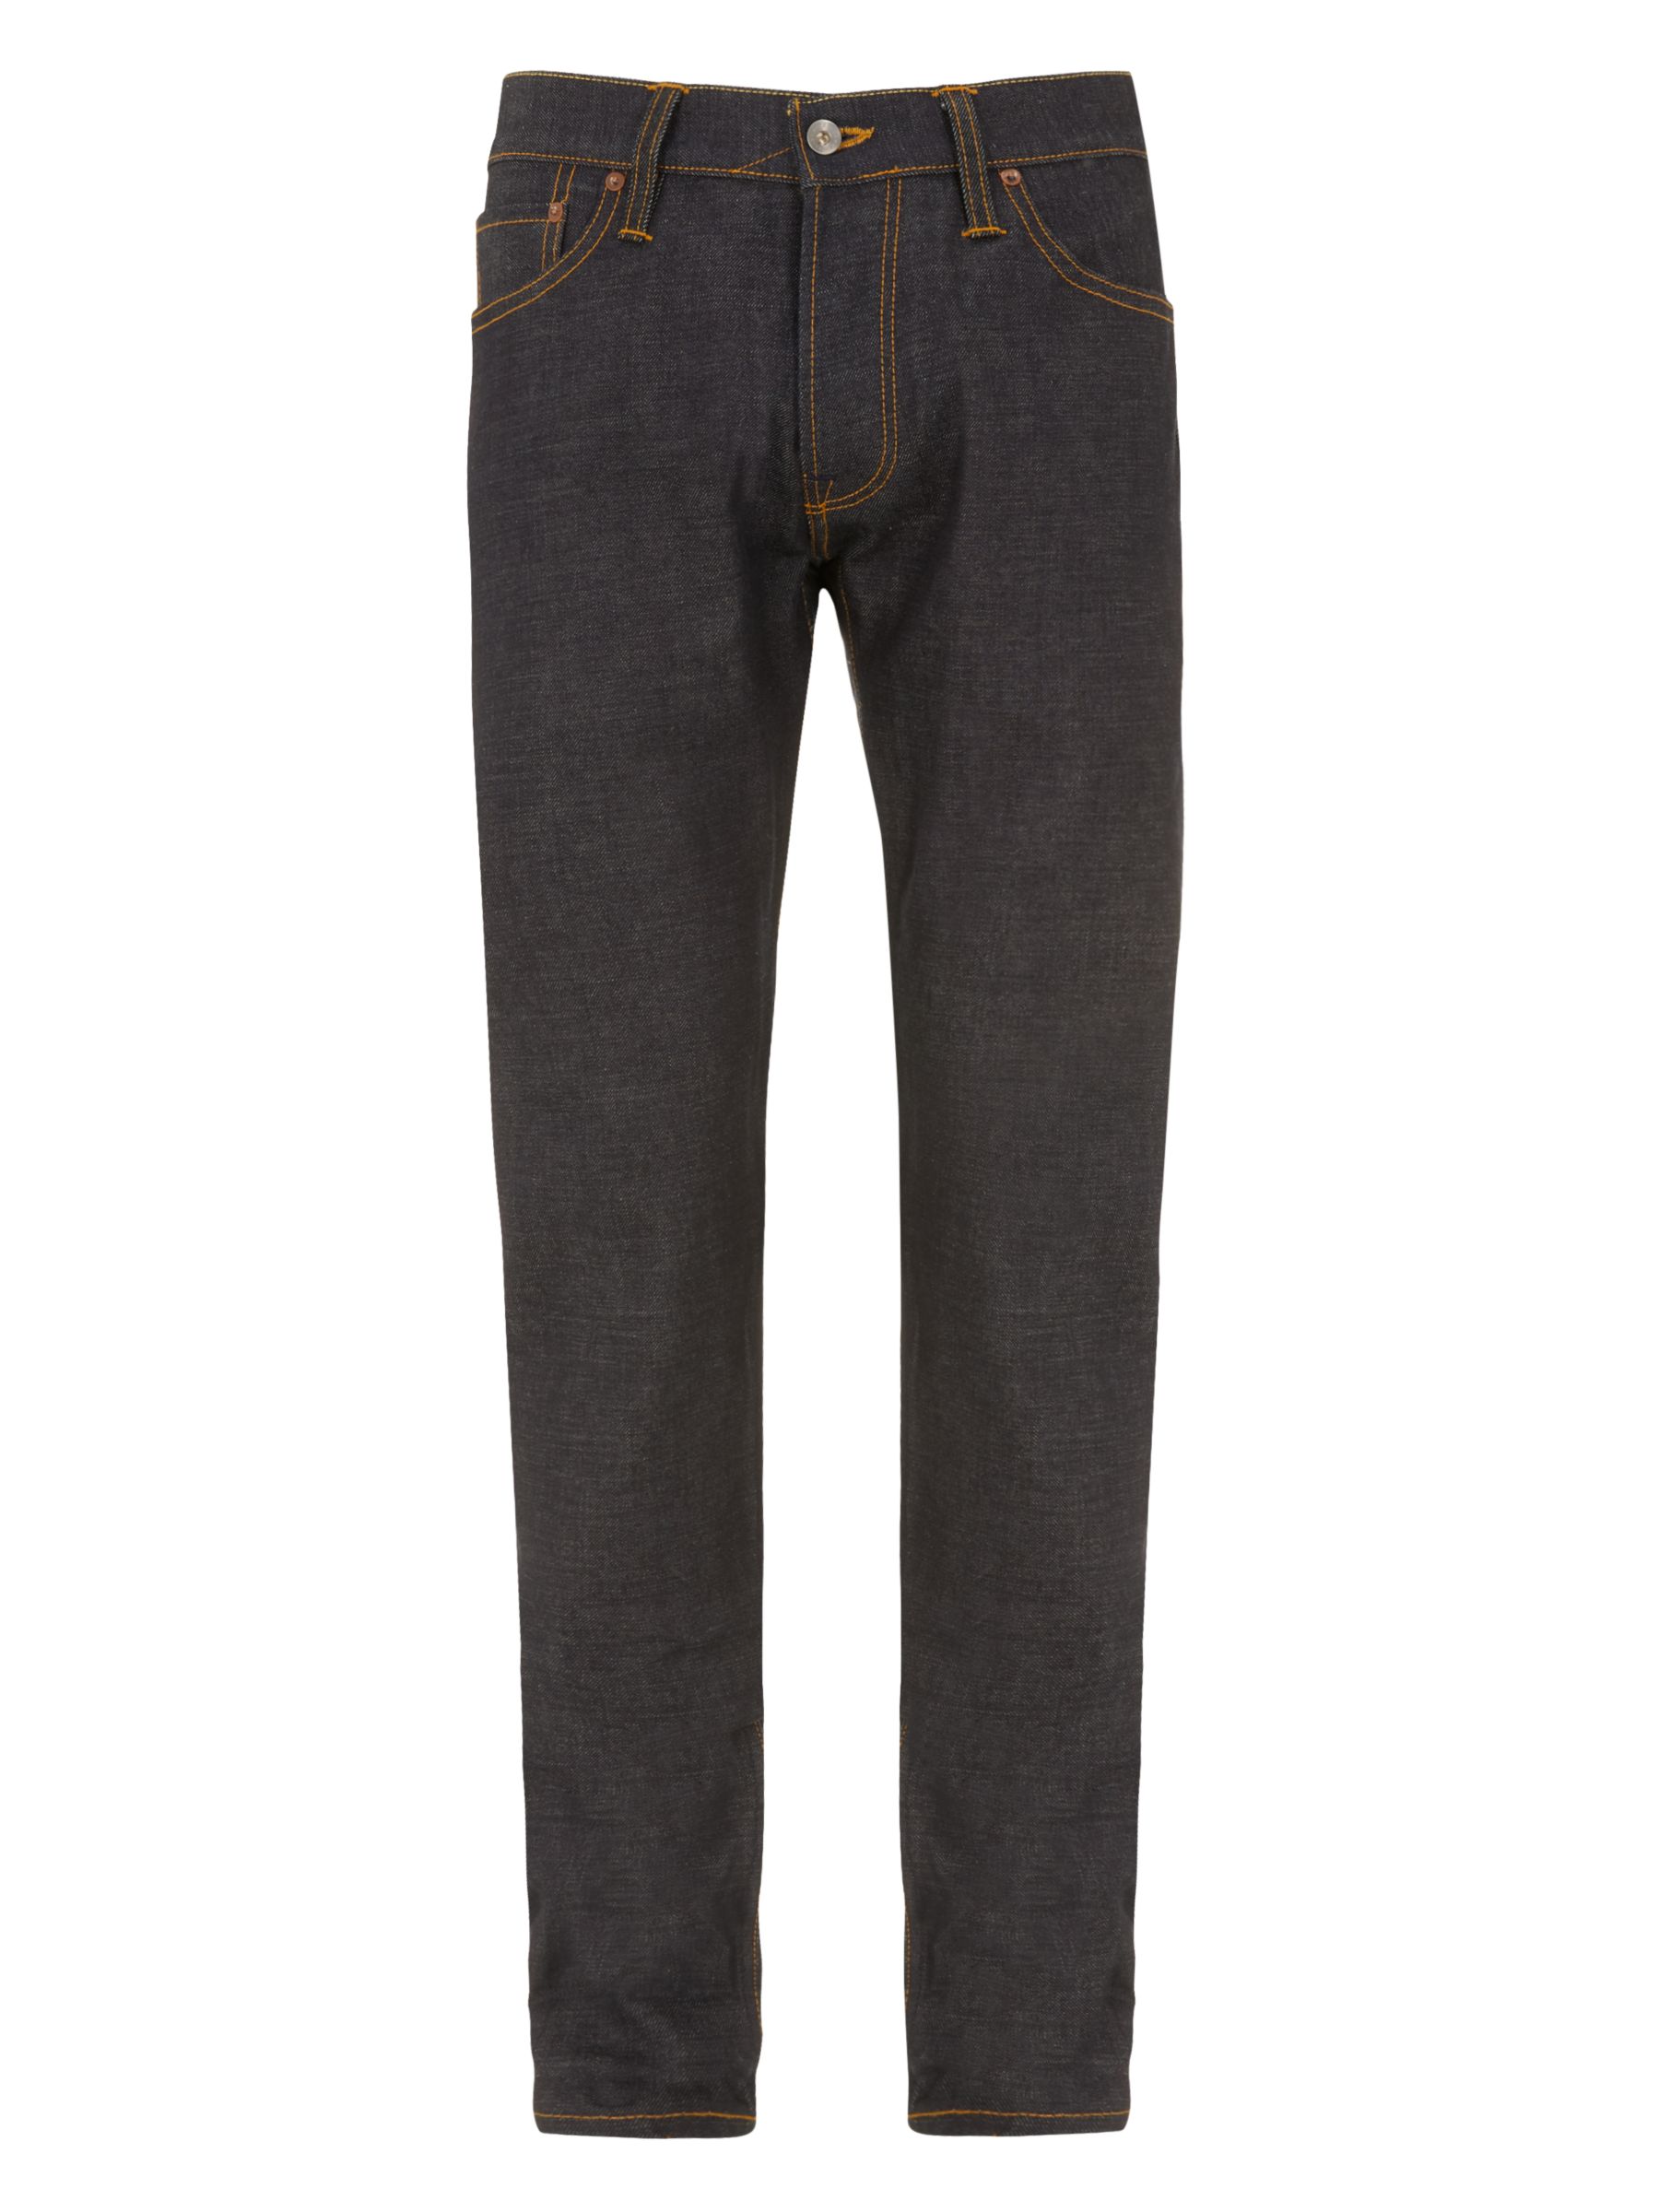 Hawksmill Denim Co Japanese Selvedge Slim Tapered Jeans, Dry Indigo